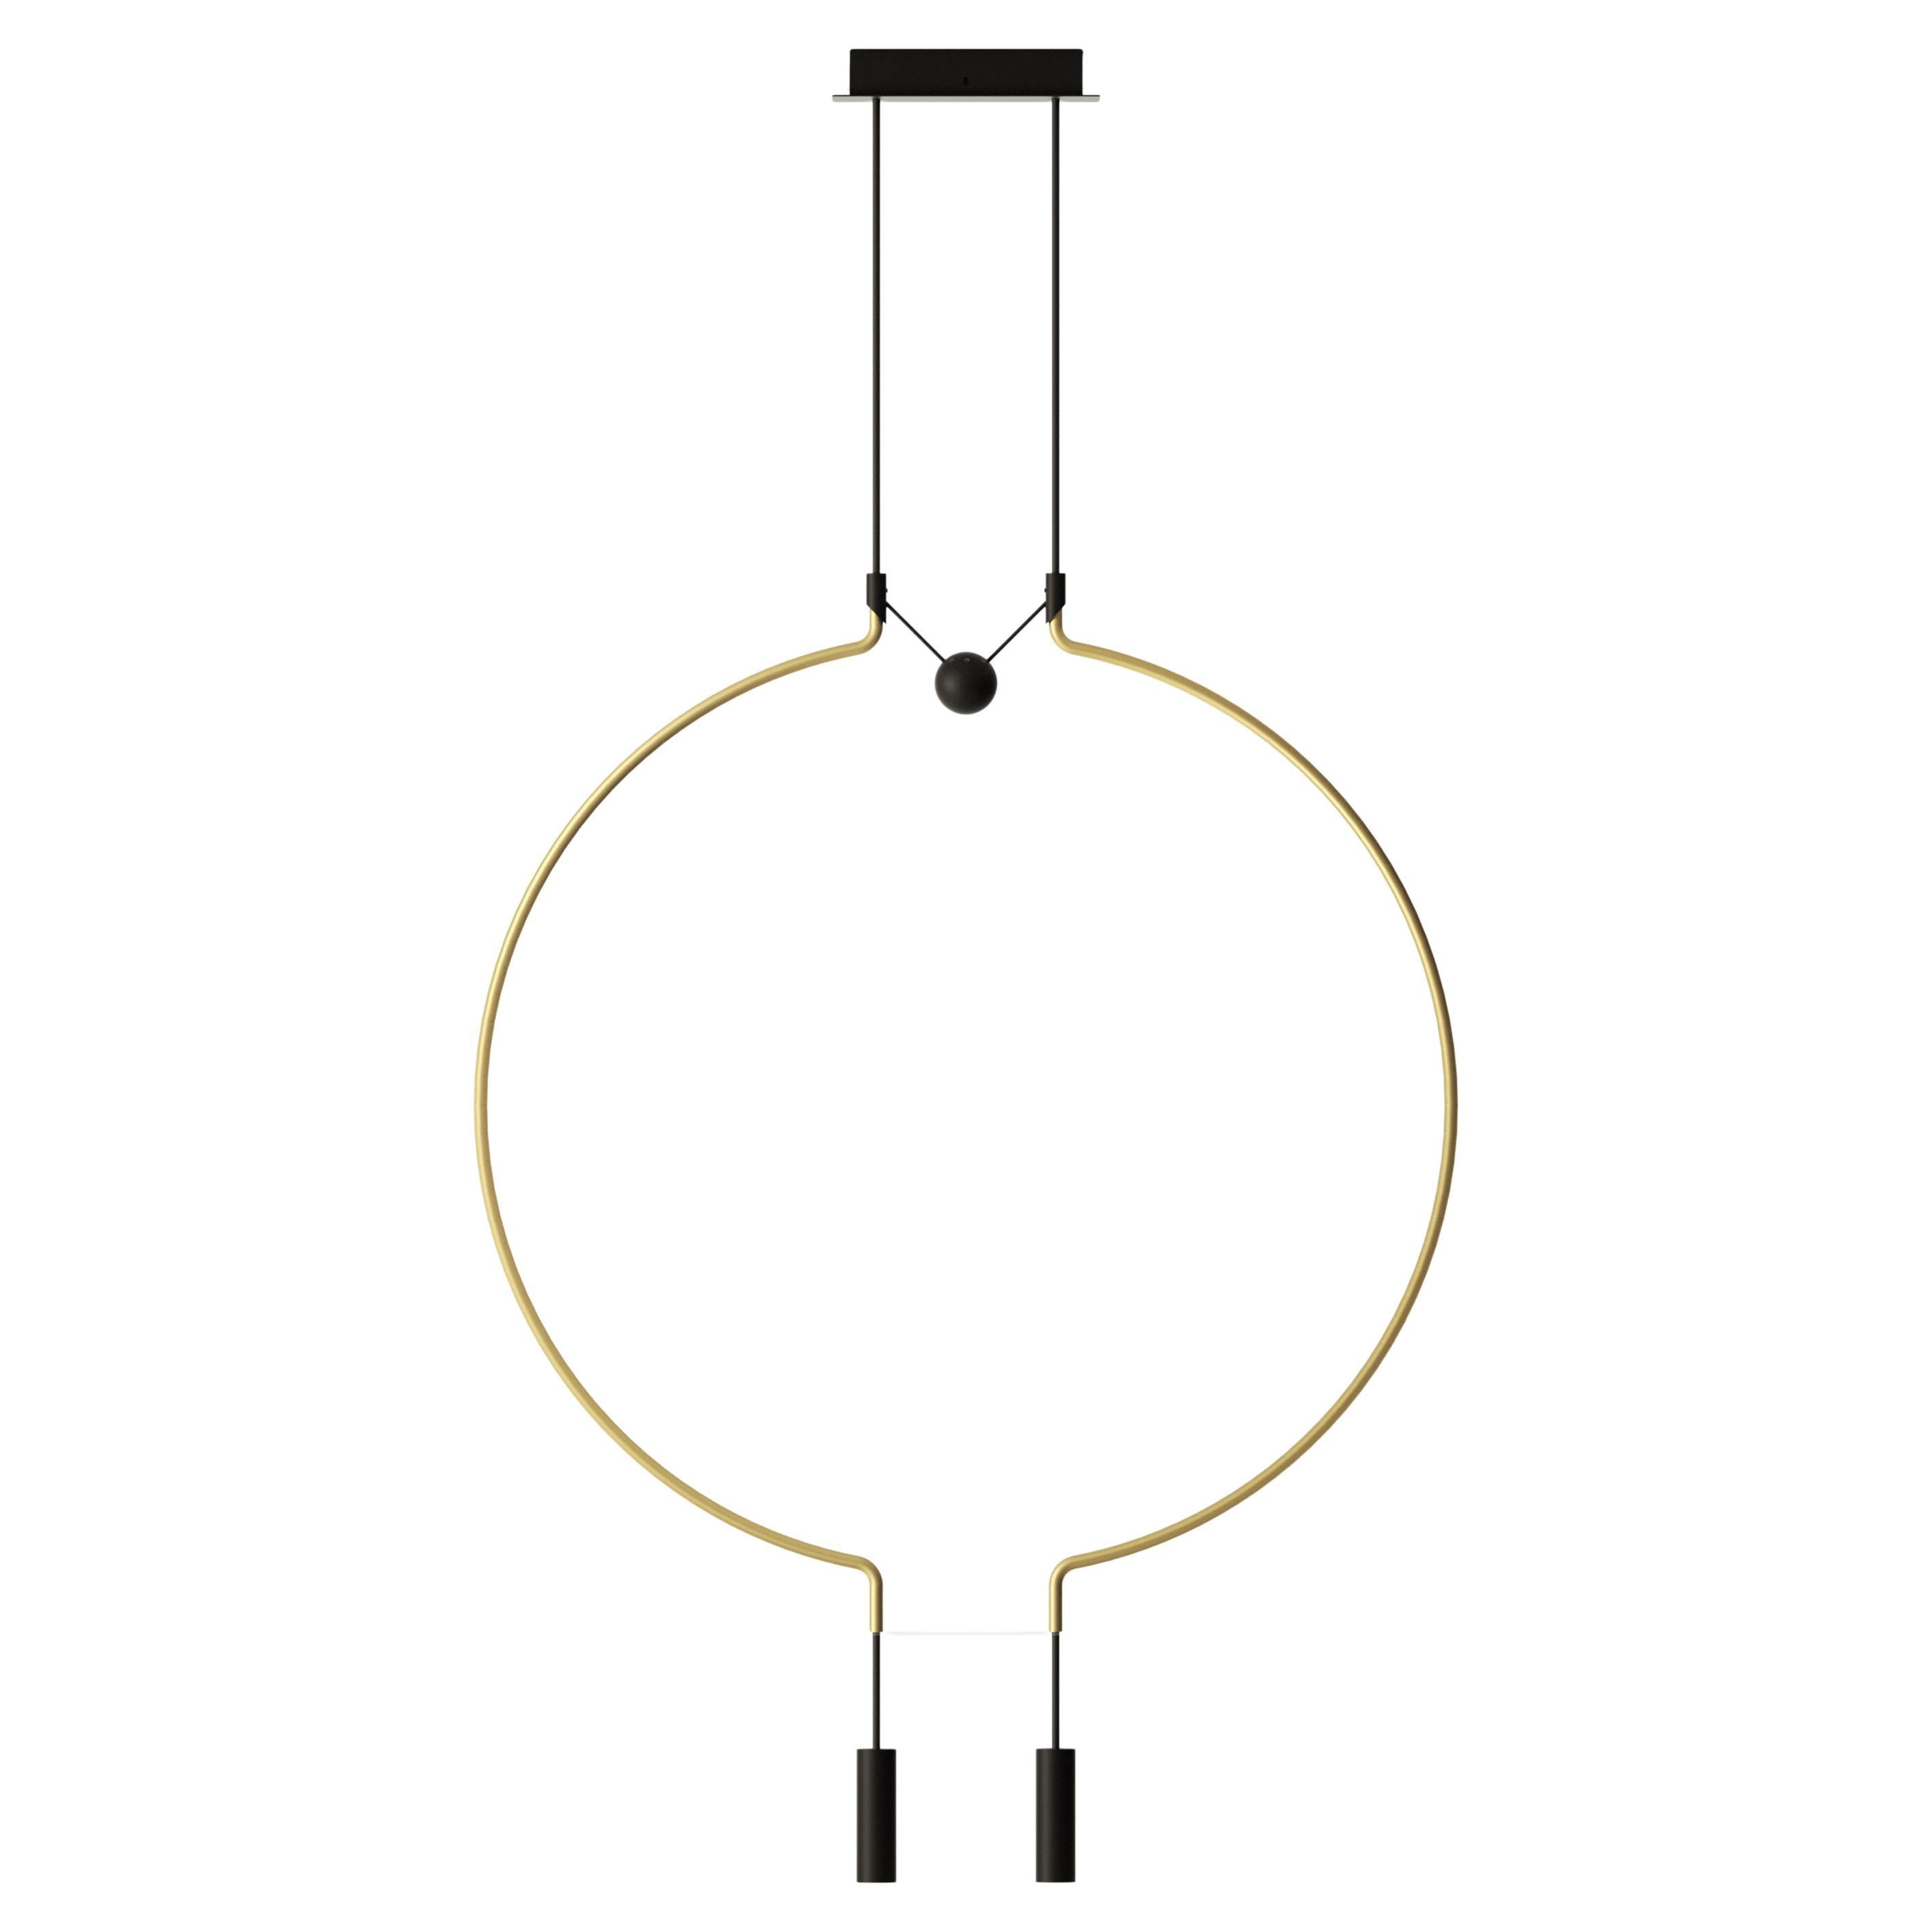 Axolight Liaison Model M2 Pendant Lamp in Gold/Black by Sara Moroni For Sale